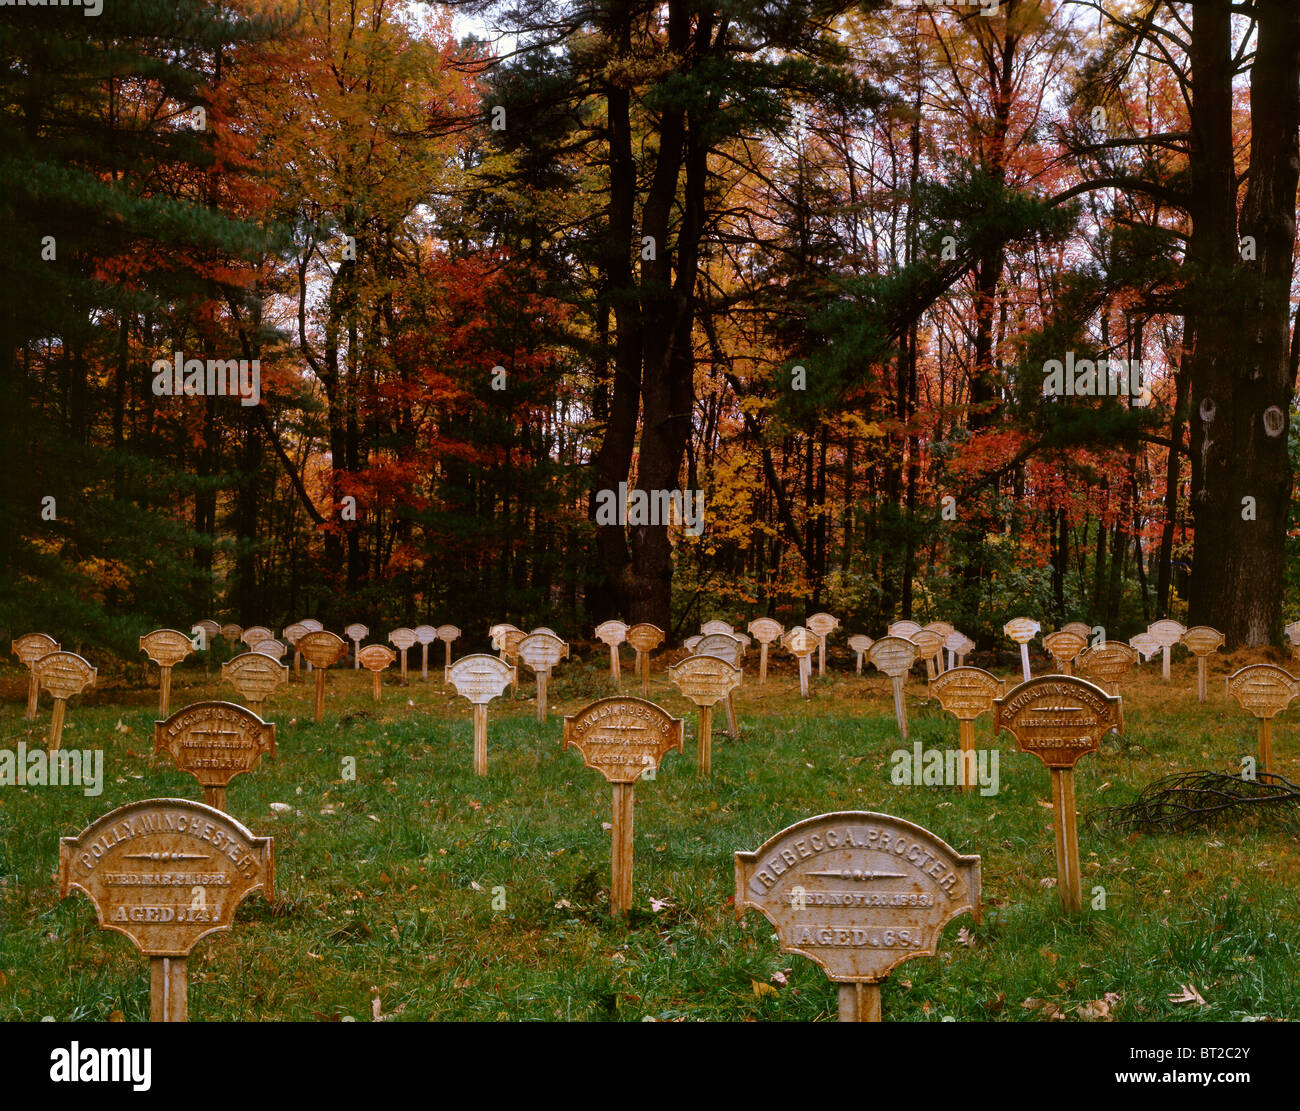 Cemetery at Shaker community Harvard. Stock Photo